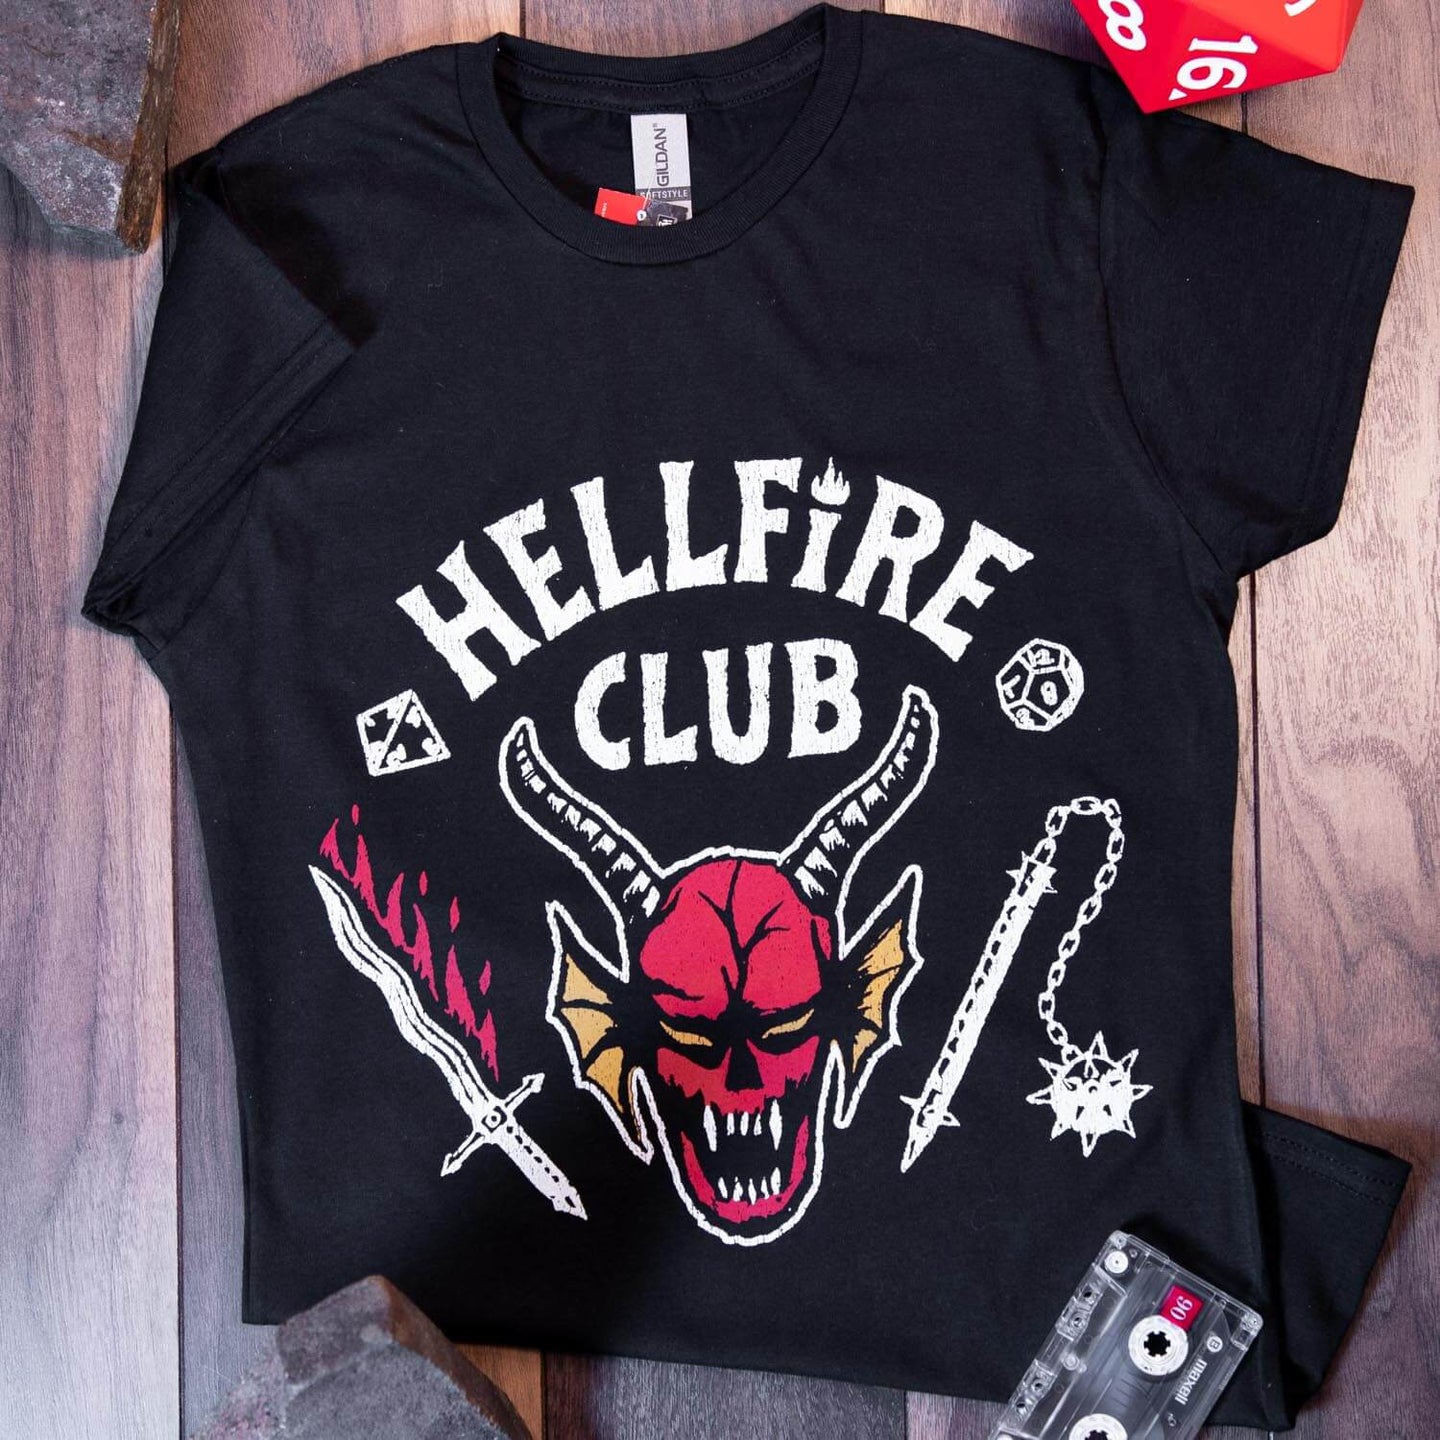 Stranger Things Hellfire Club T-Shirt - Women's, Black Crew Neck, Season 4